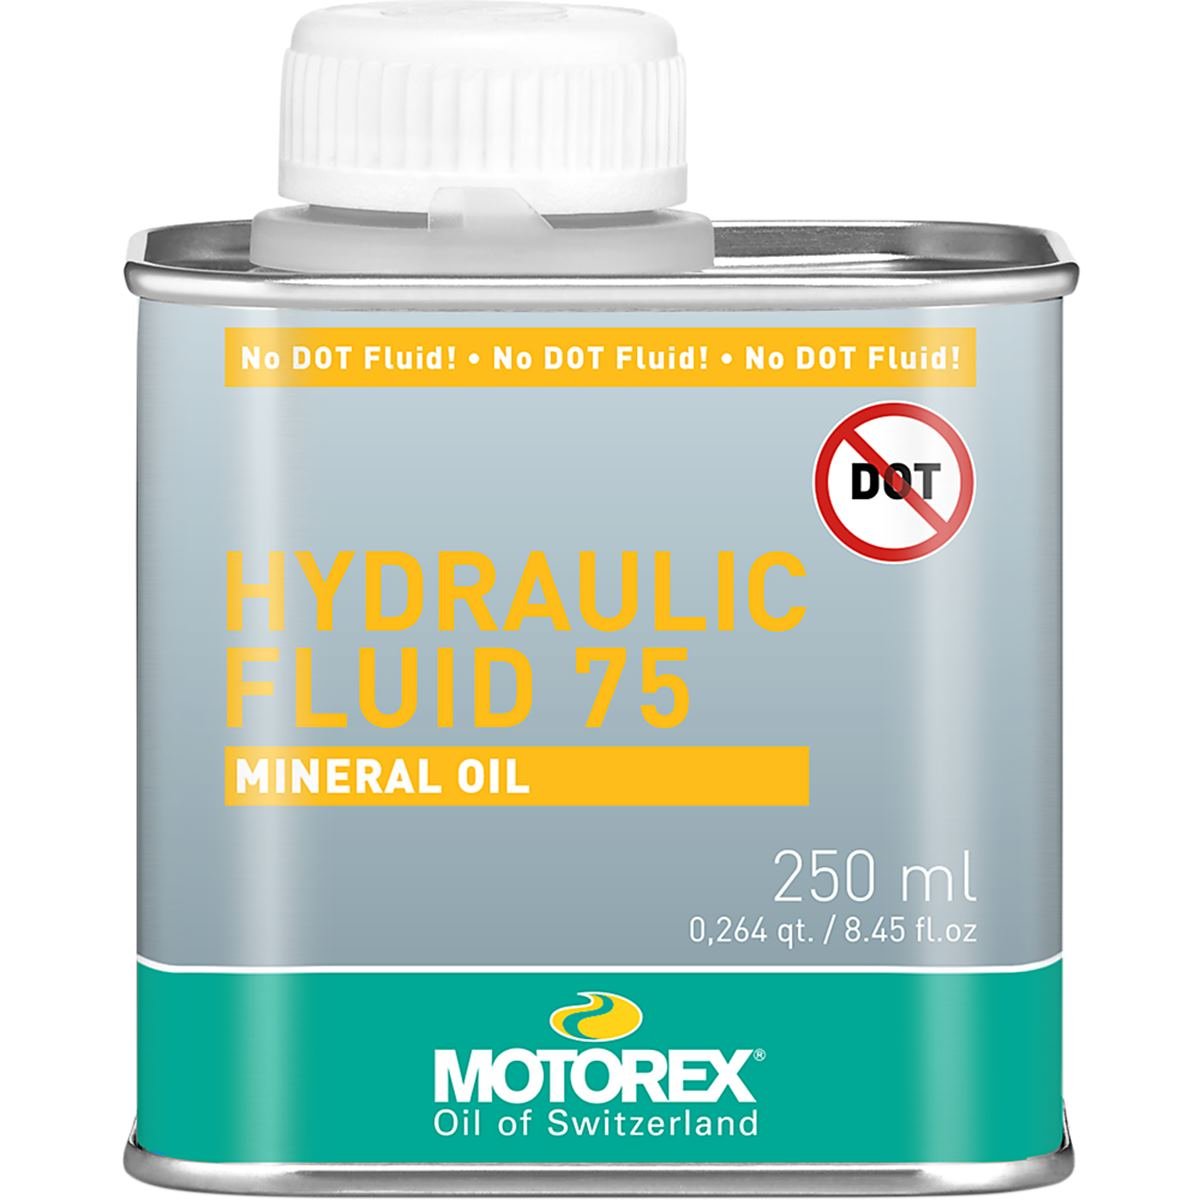 Motorex Mineralöl Fluid 75 250 ml